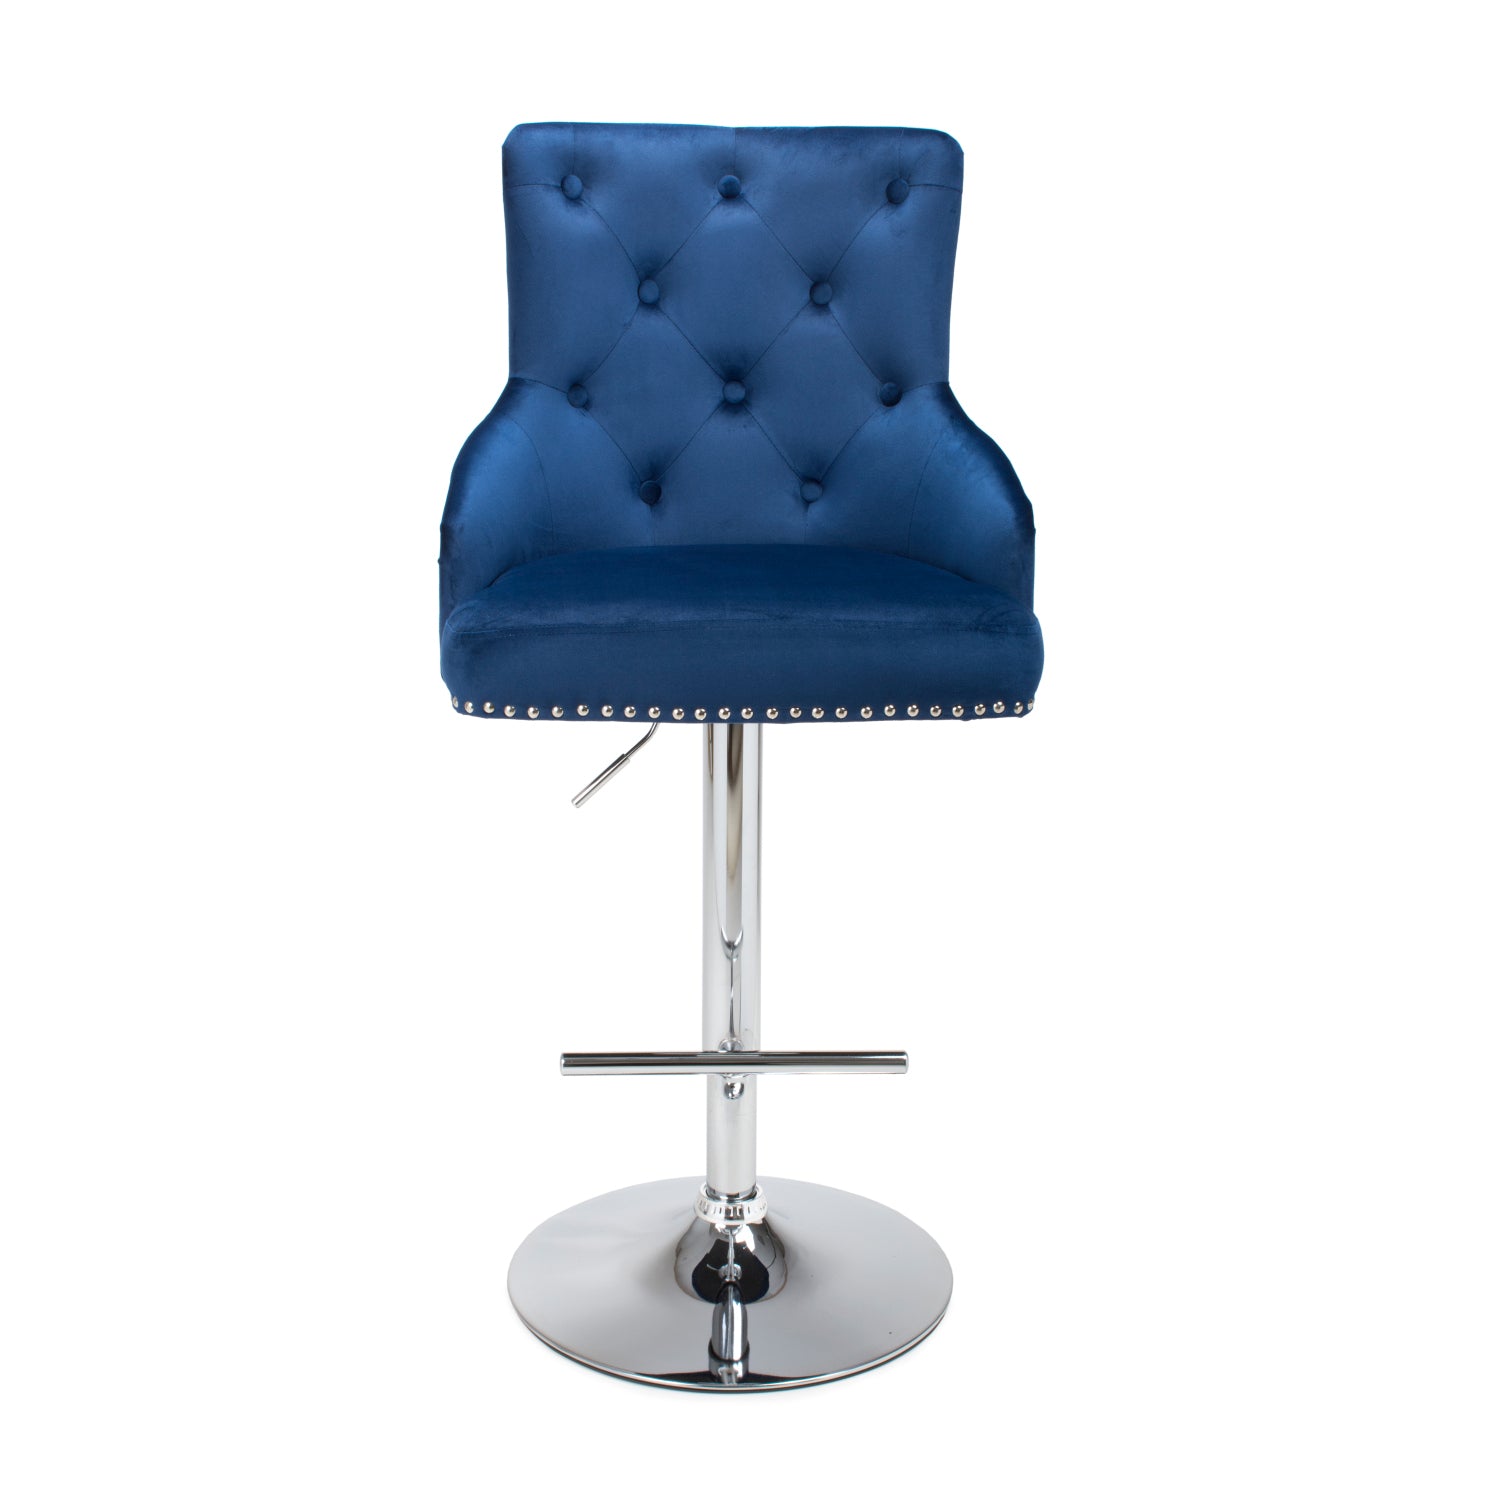 Rocco brush velvet adjustable bar stools from Top Secret Furniture